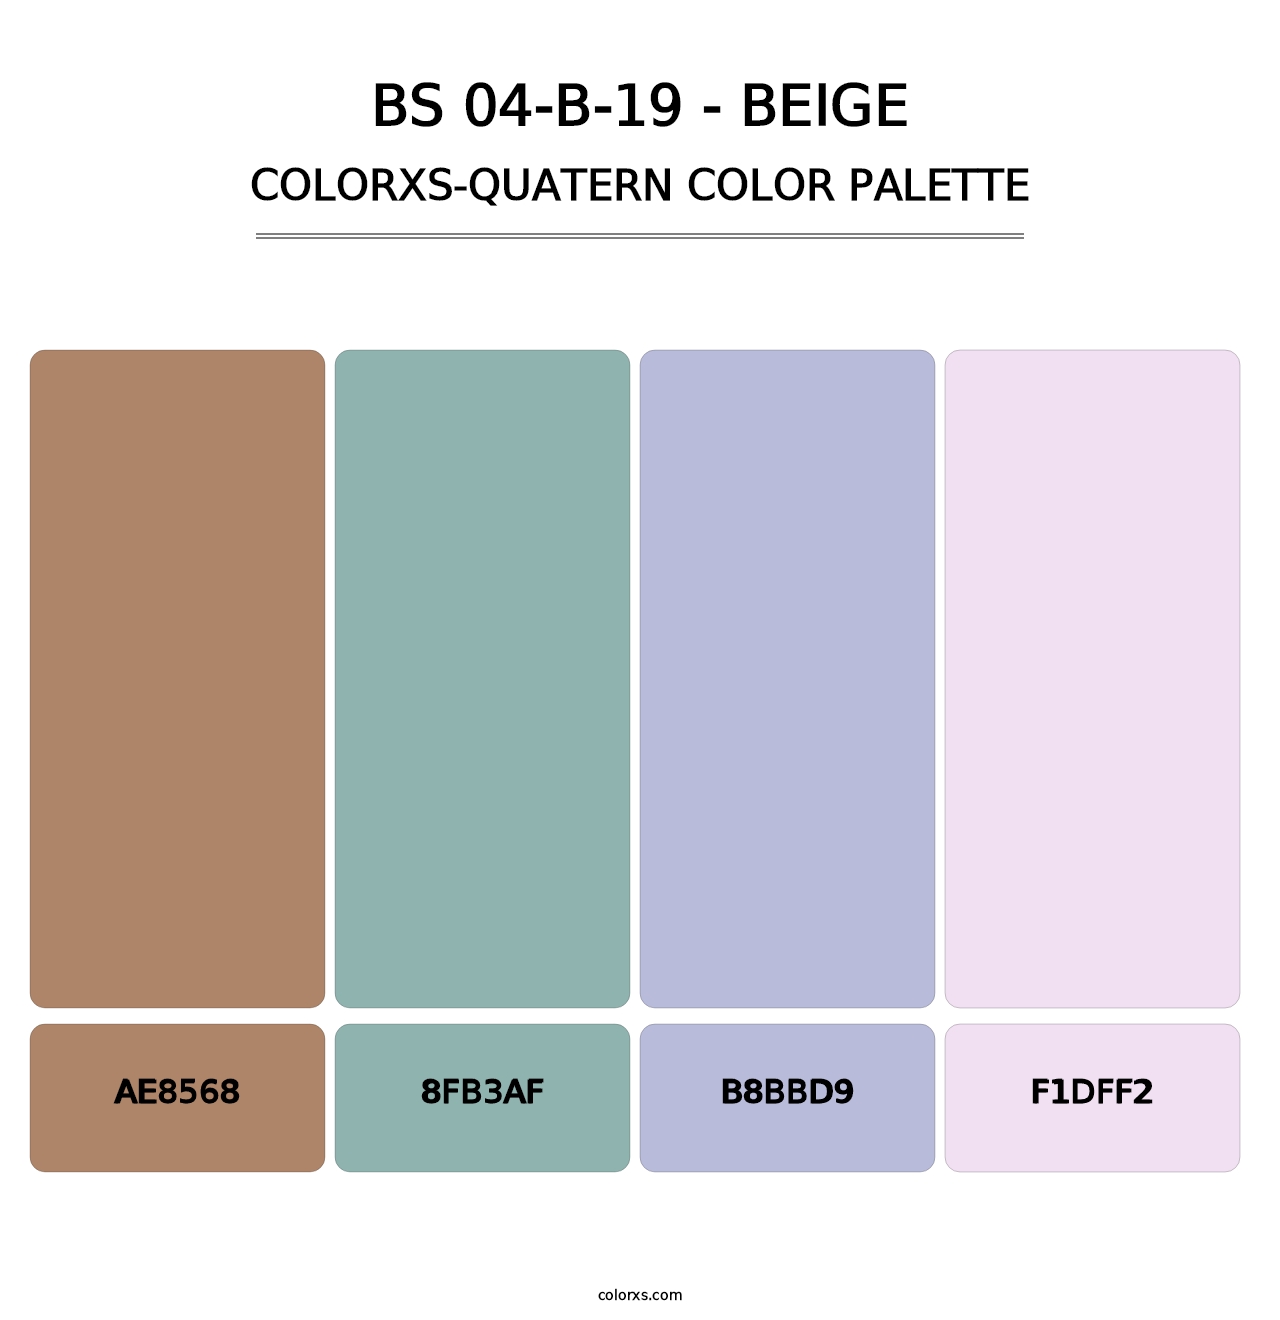 BS 04-B-19 - Beige - Colorxs Quatern Palette